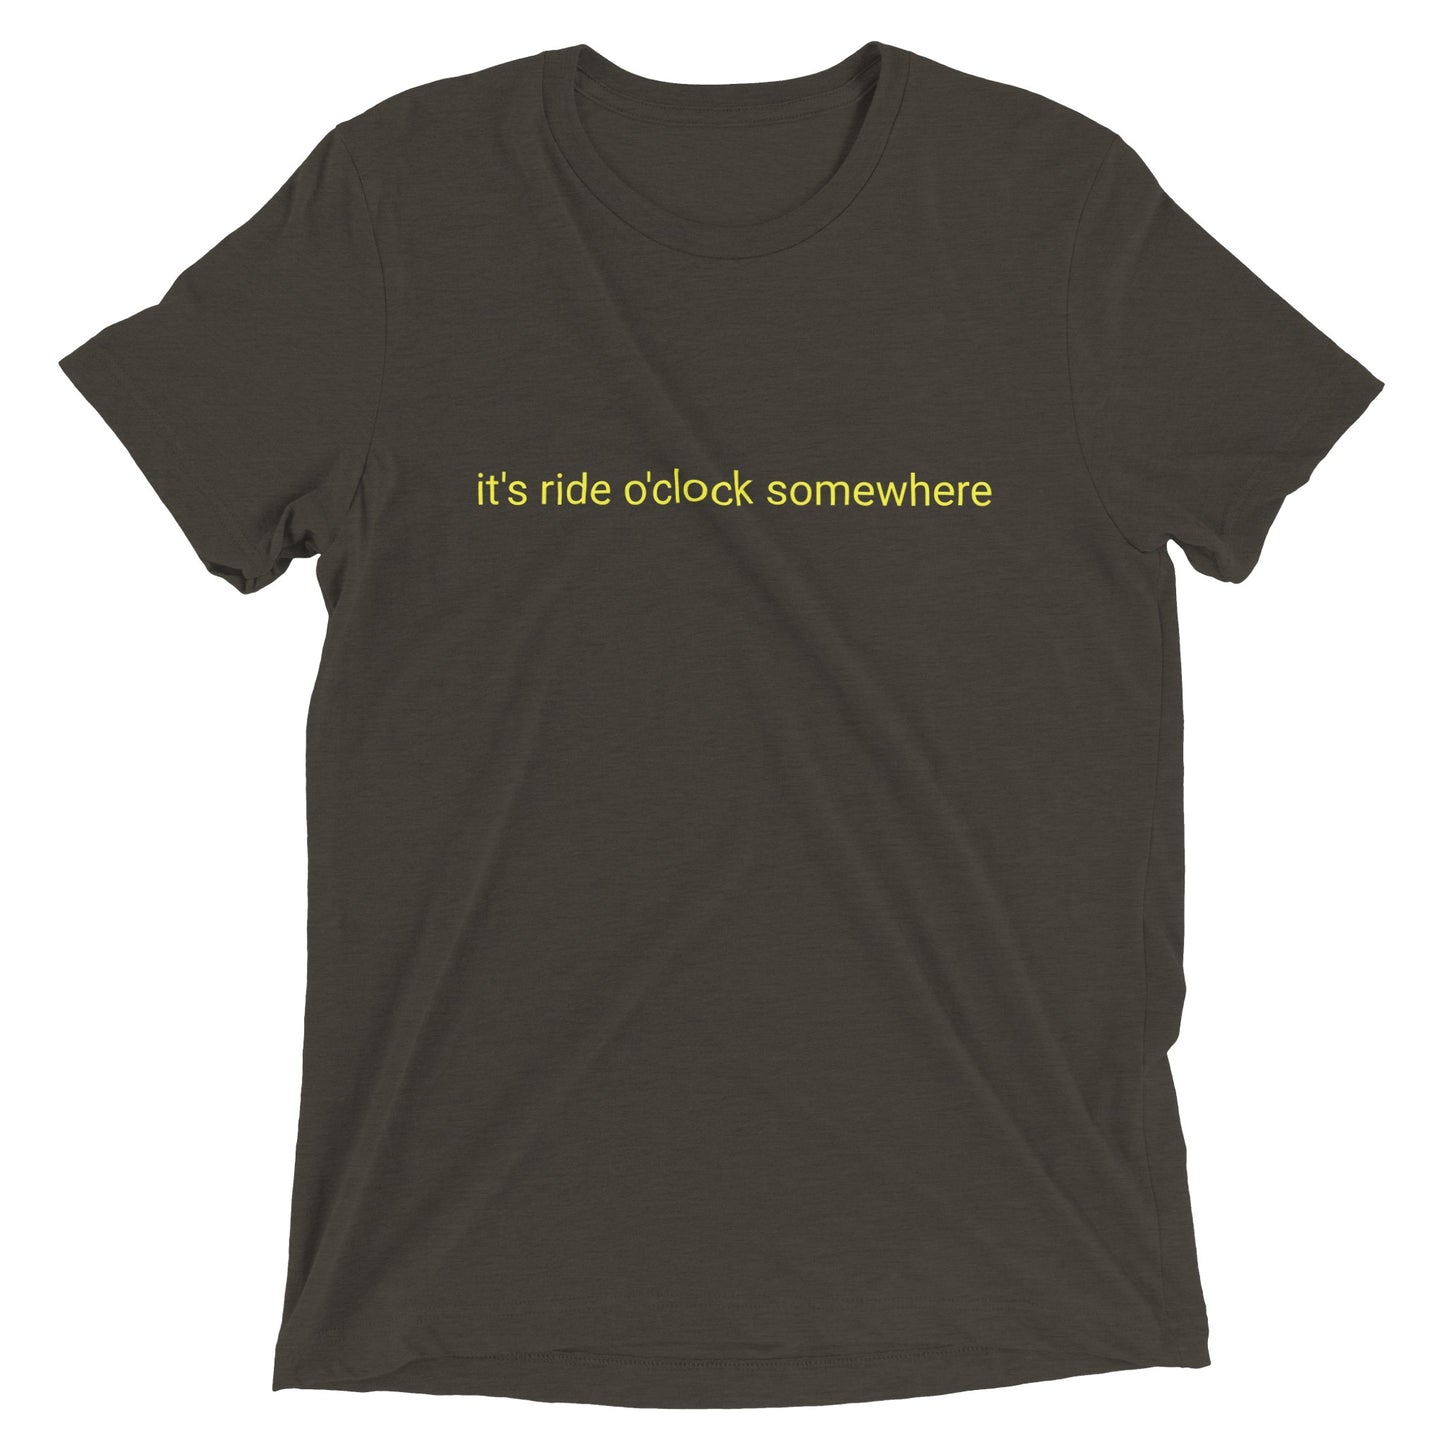 It's ride o'clock somewhere - Triblend Unisex Crewneck T-shirt